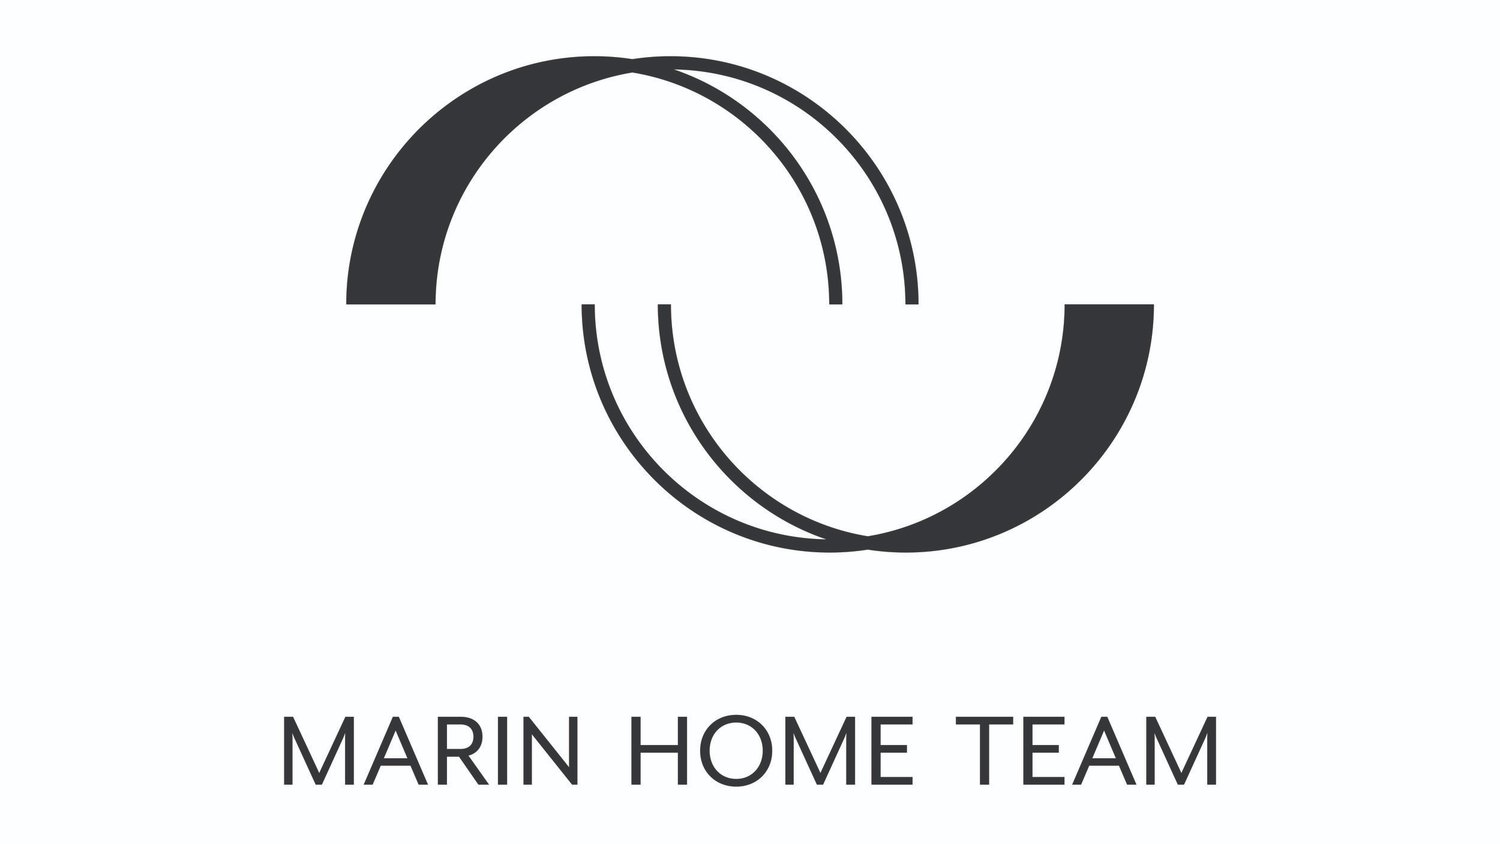 The Marin Home Team